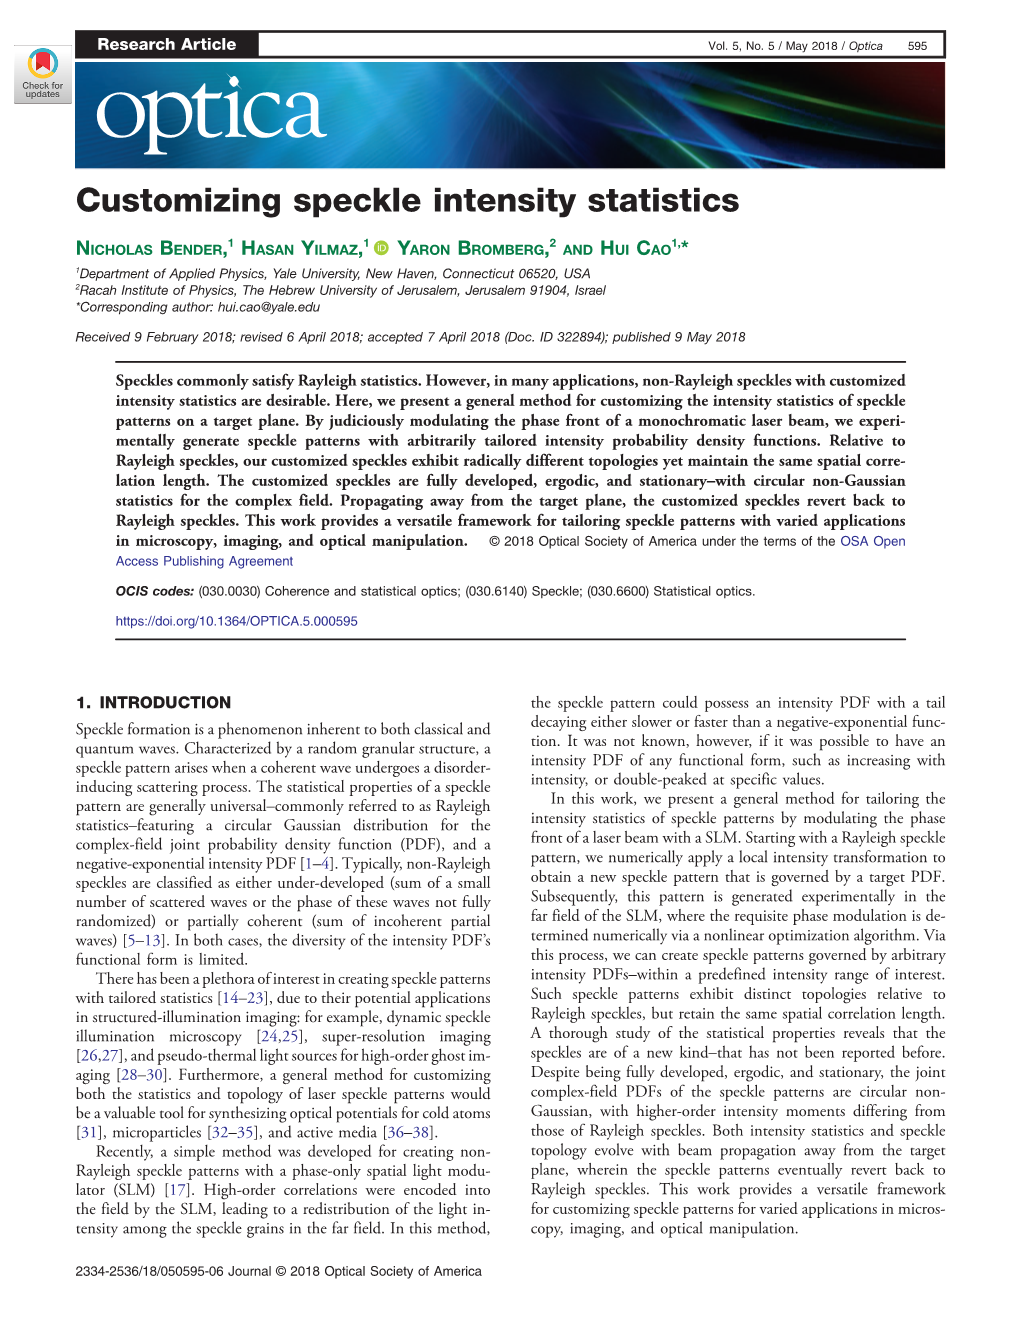 Customizing Speckle Intensity Statistics